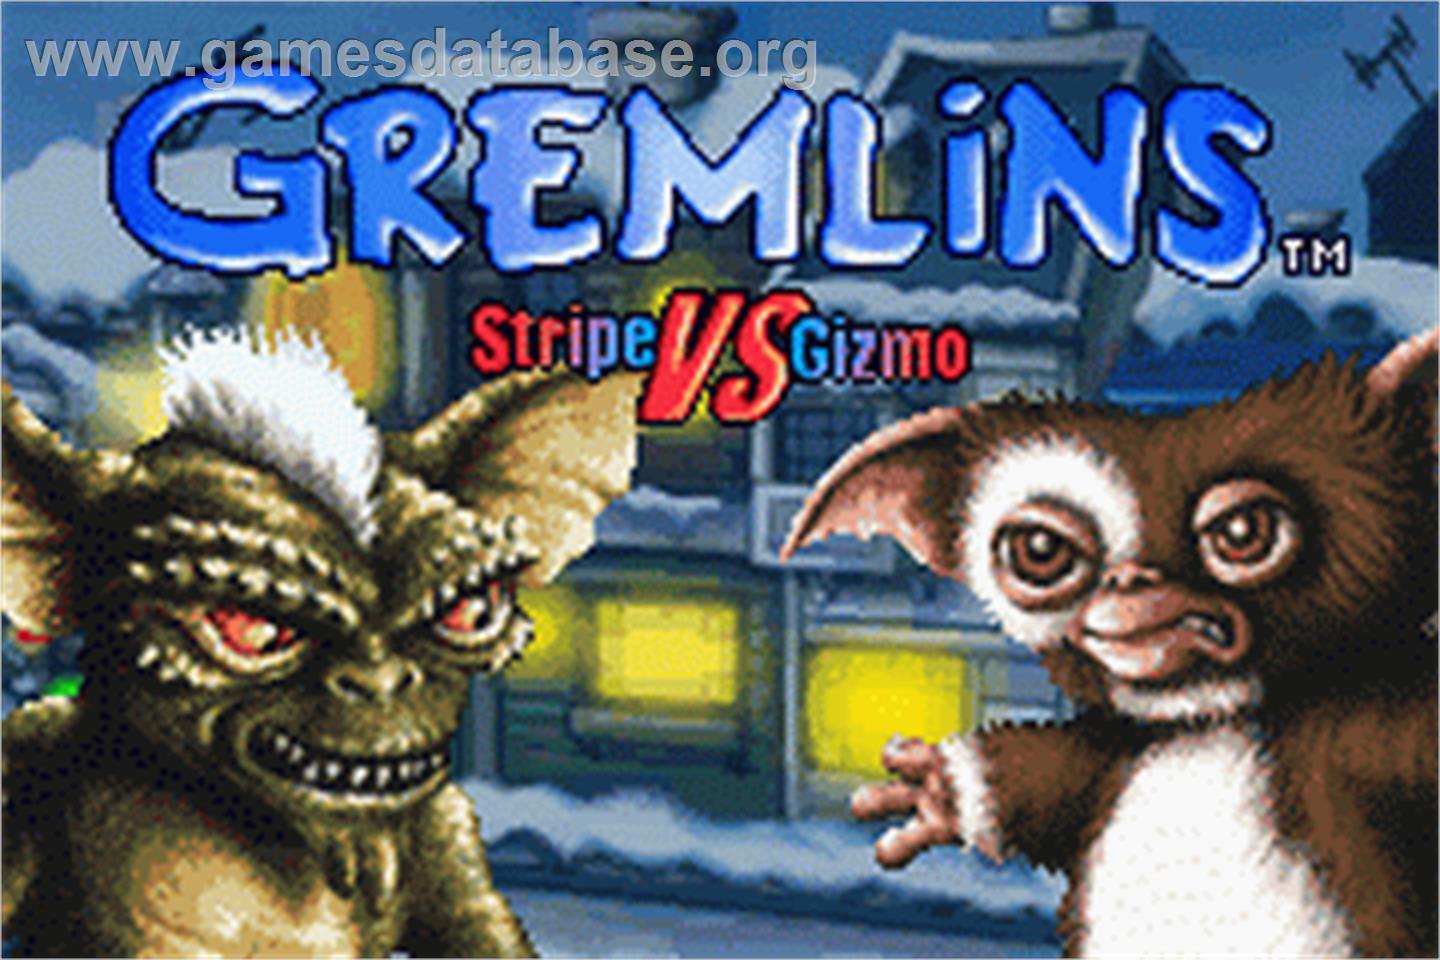 Gremlins: Stripe Vs. Gizmo - Nintendo Game Boy Advance - Artwork - Title Screen